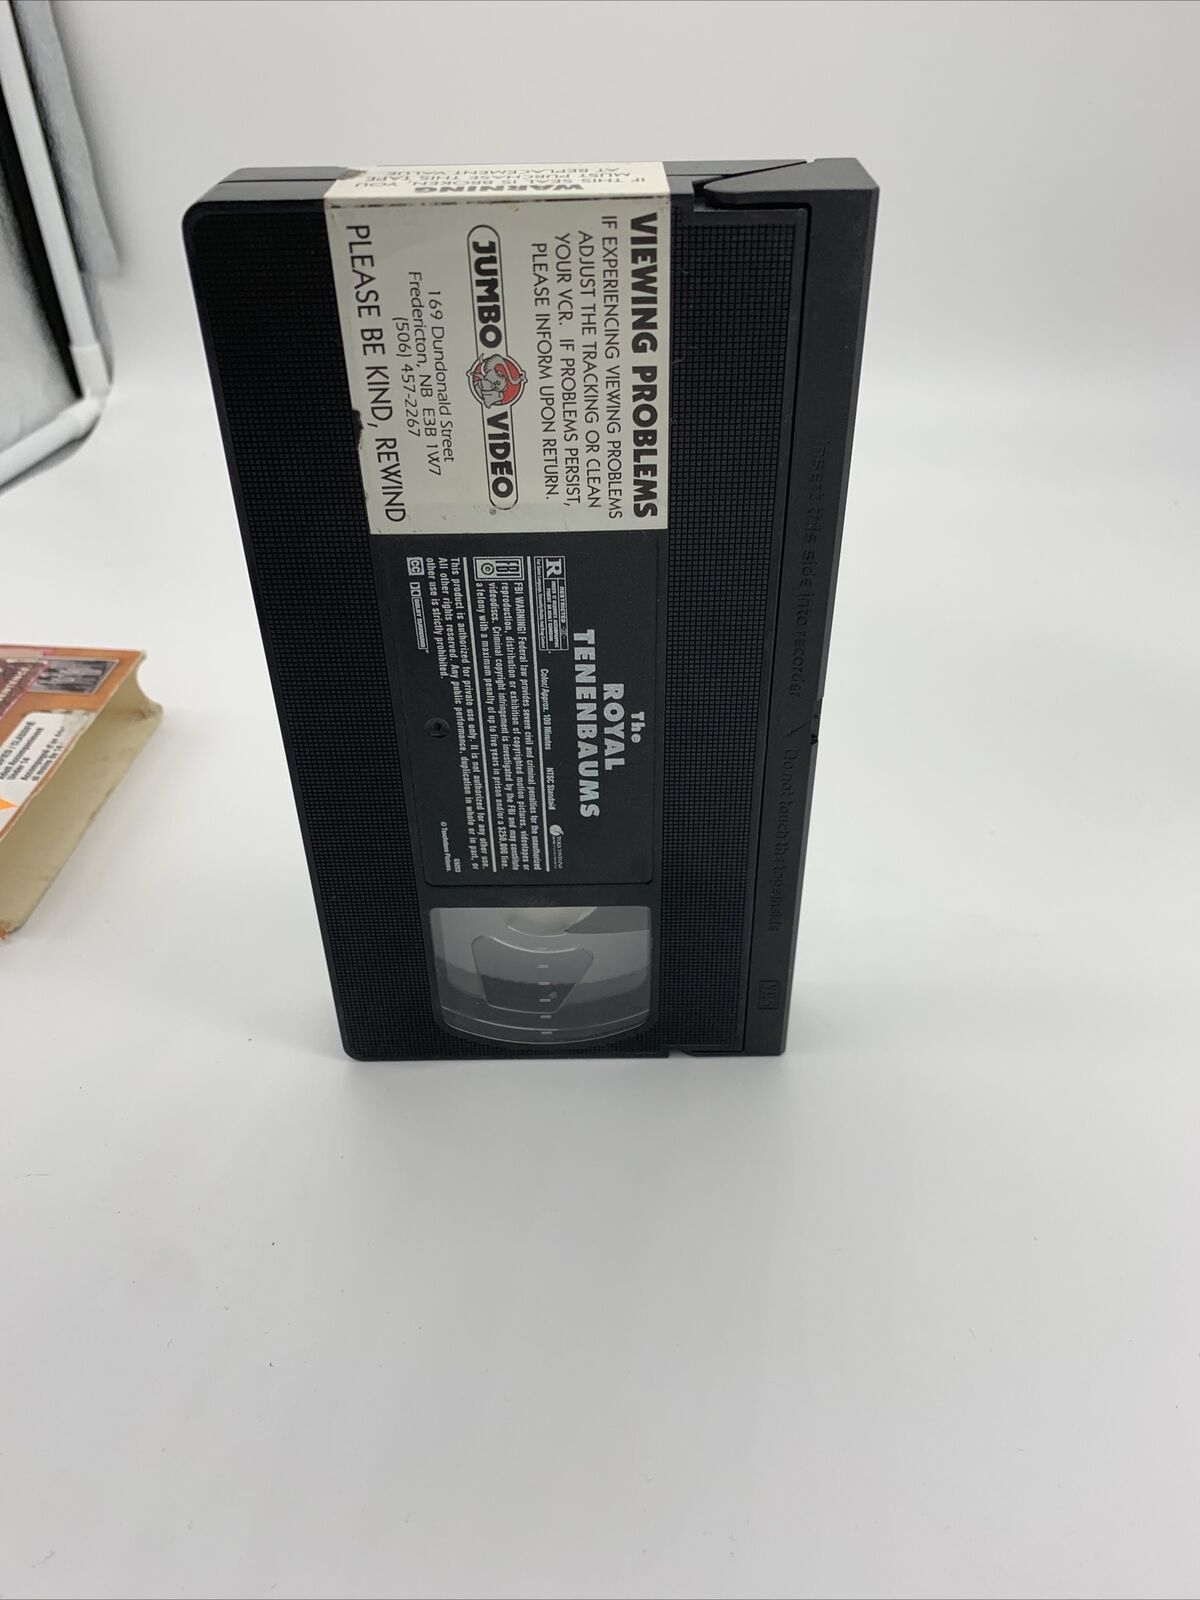 The Royal Tenenbaums VHS